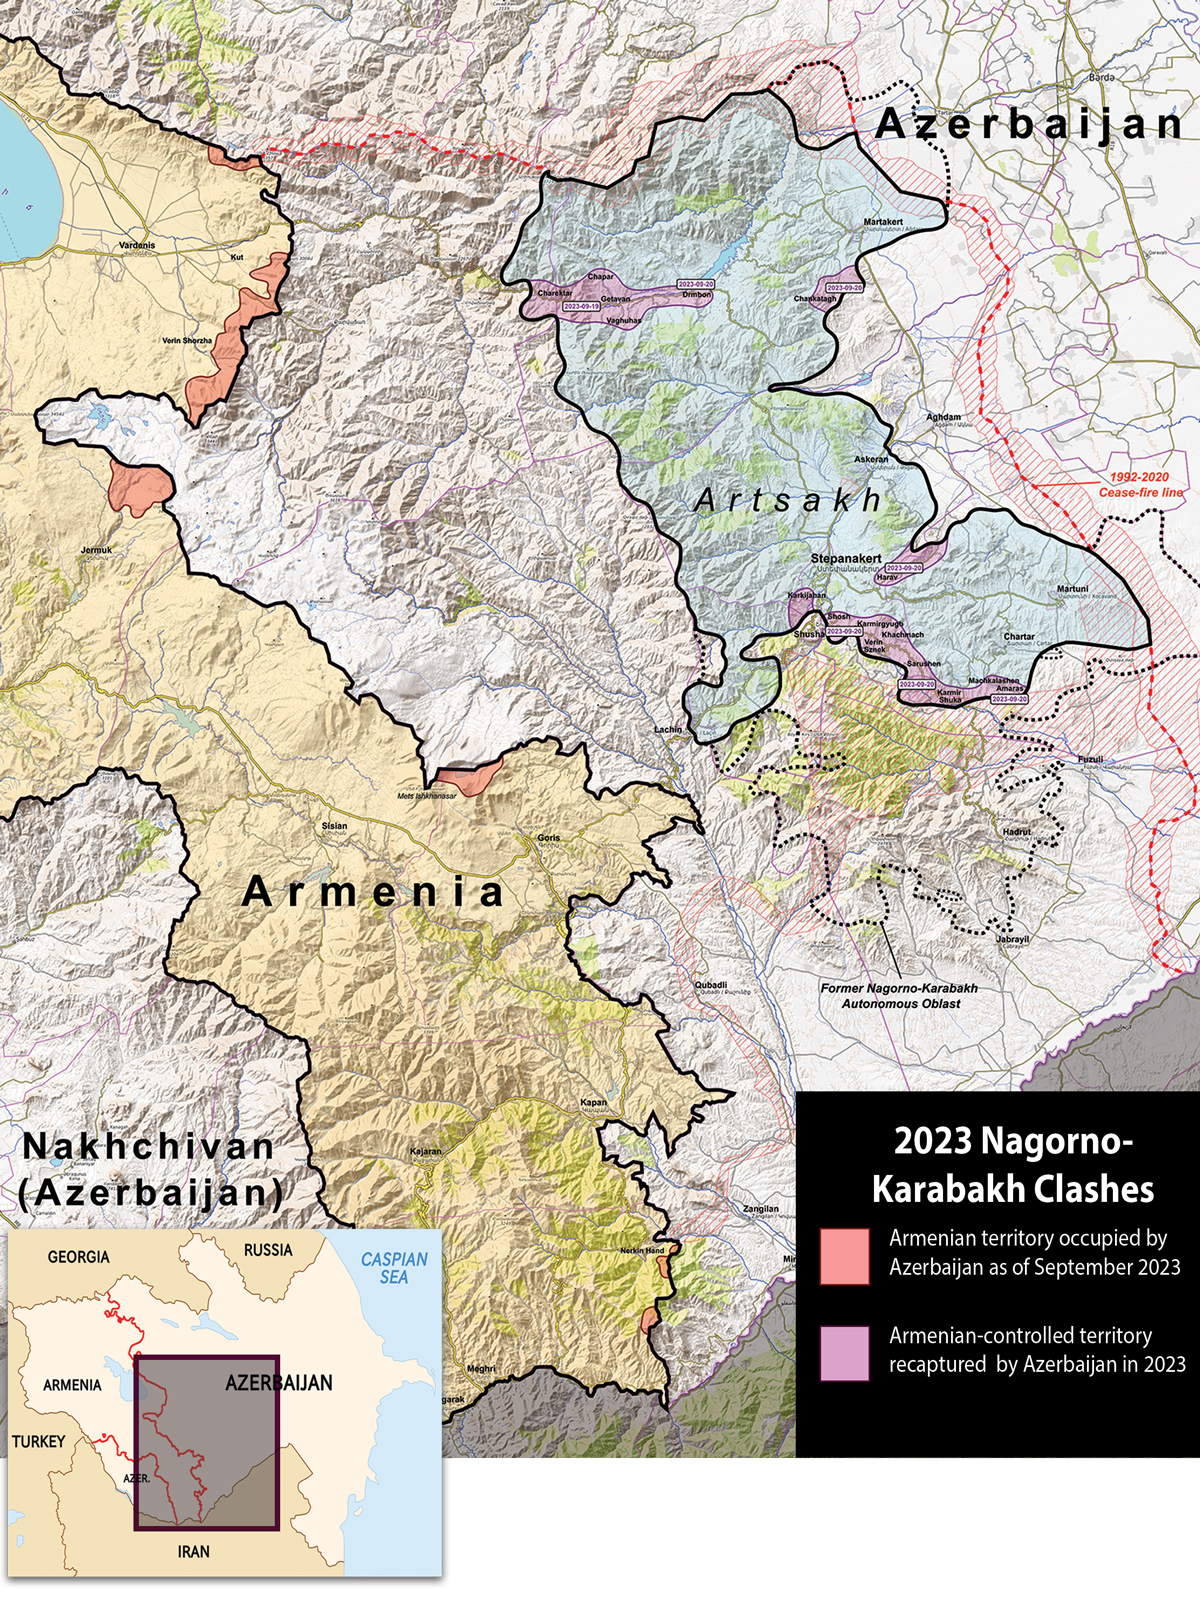 >Nagorno-Karabakh appears on this map as Artsakh